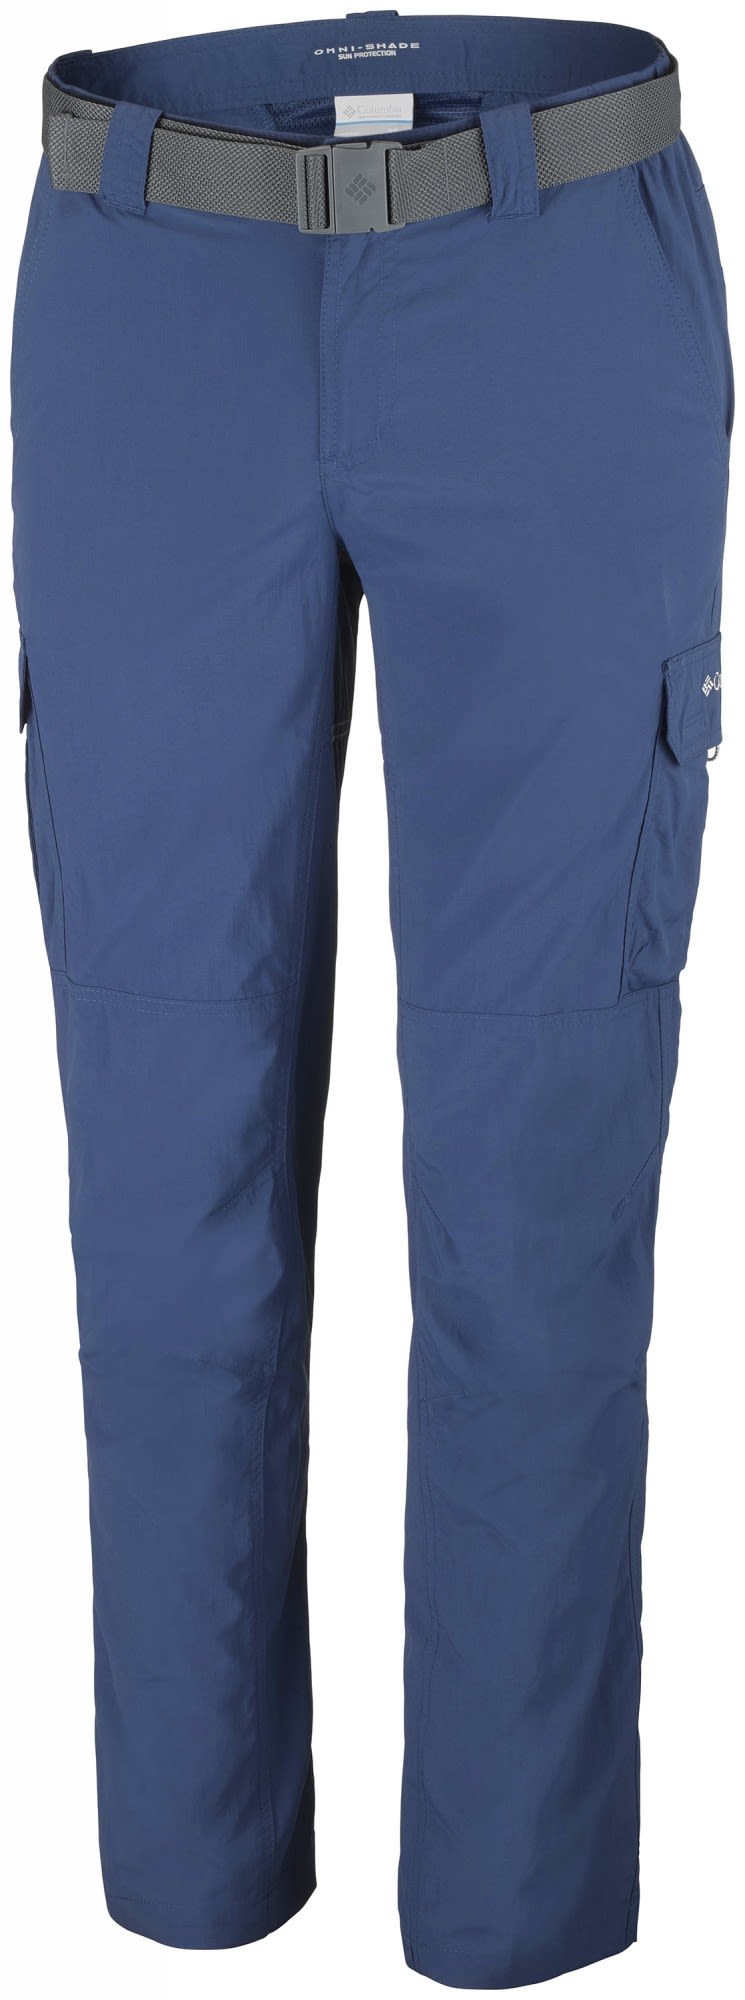 Columbia Silver Ridge II Cargo Pant Blau- Male Hosen- Grsse 30 - 32 - Farbe Carbon